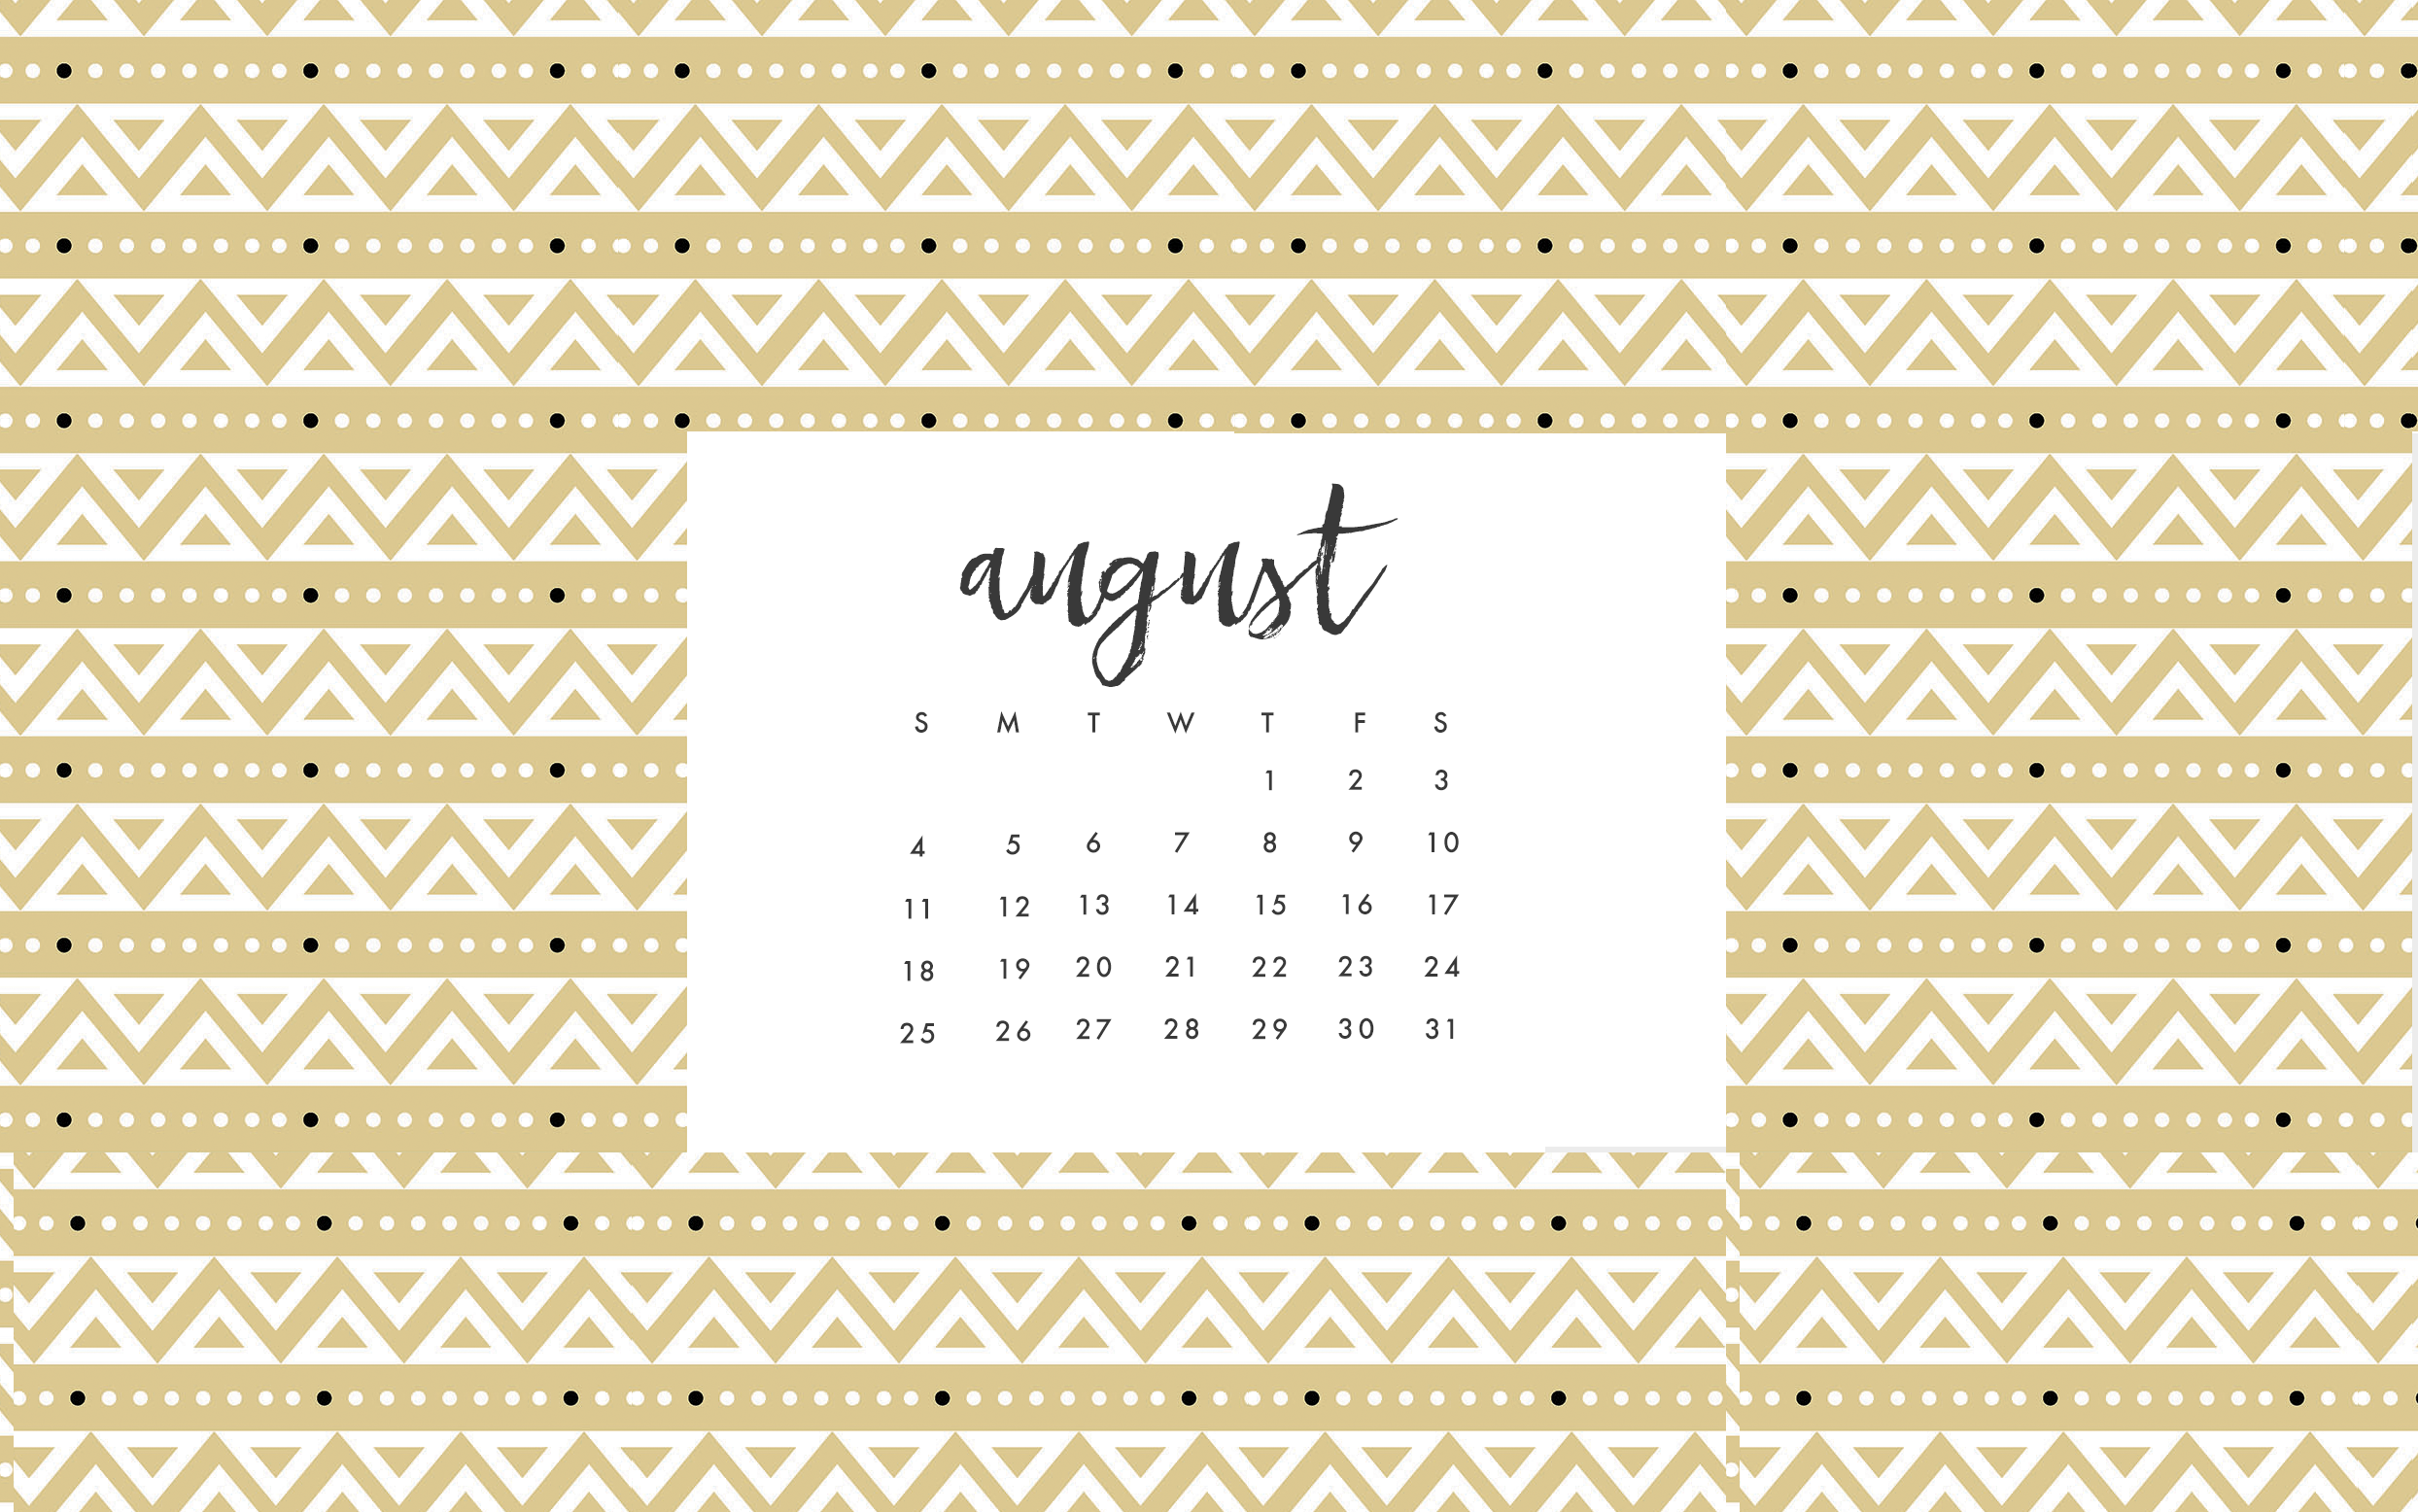 Canvas Design August 2019 Calendar